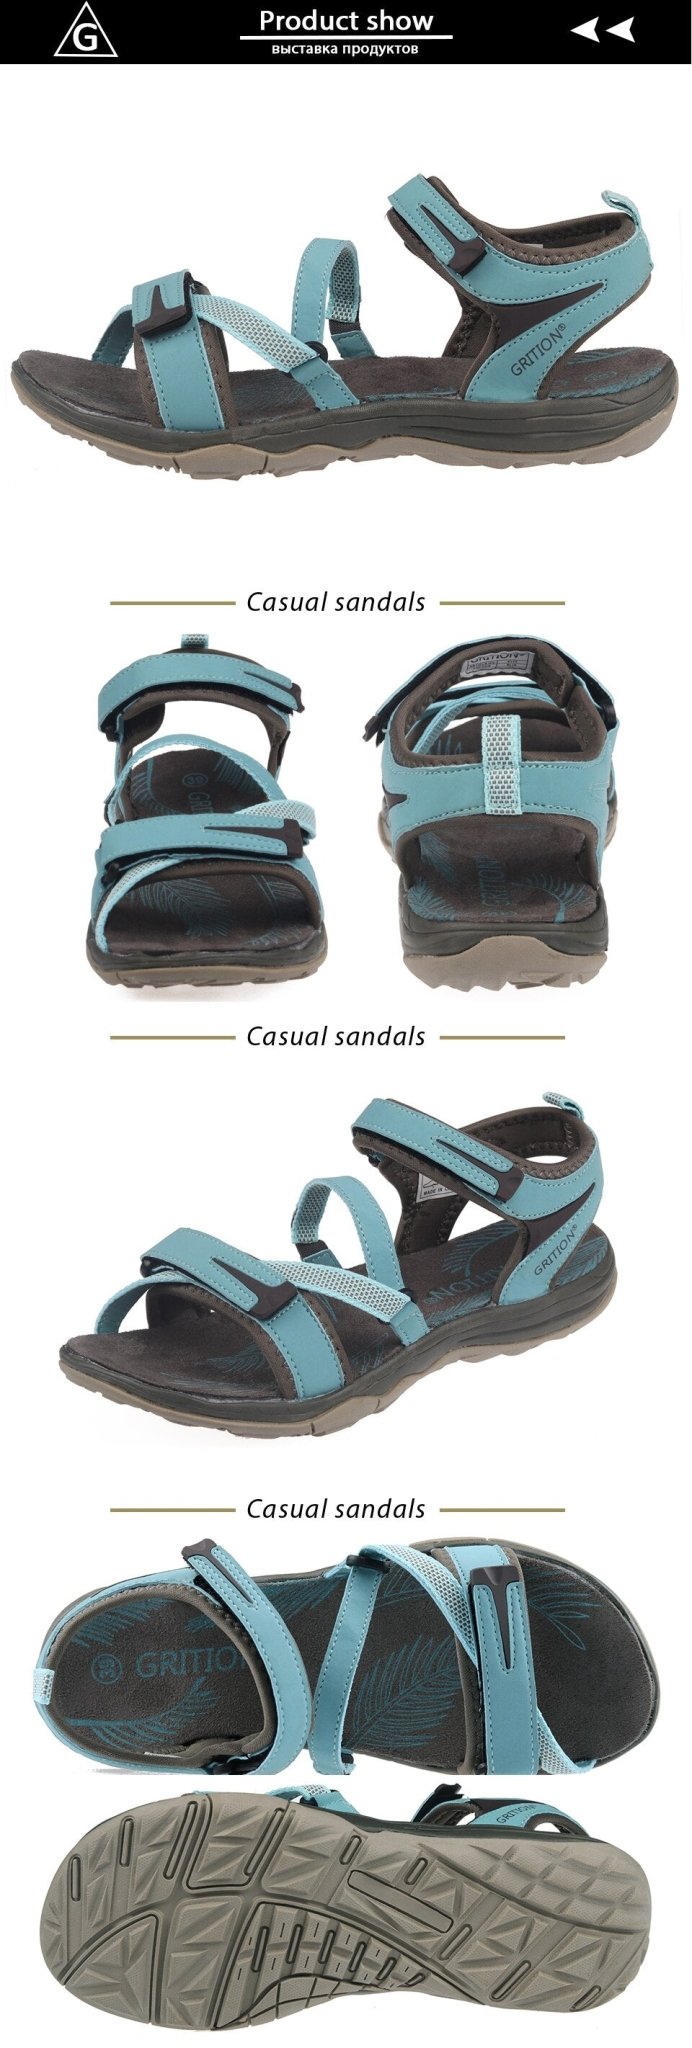 Beach Sandals Women Summer Outdoor Flat Sandals Ladies Open Toe Shoes Lightweight Breathable Walking Hiking Sandals-24